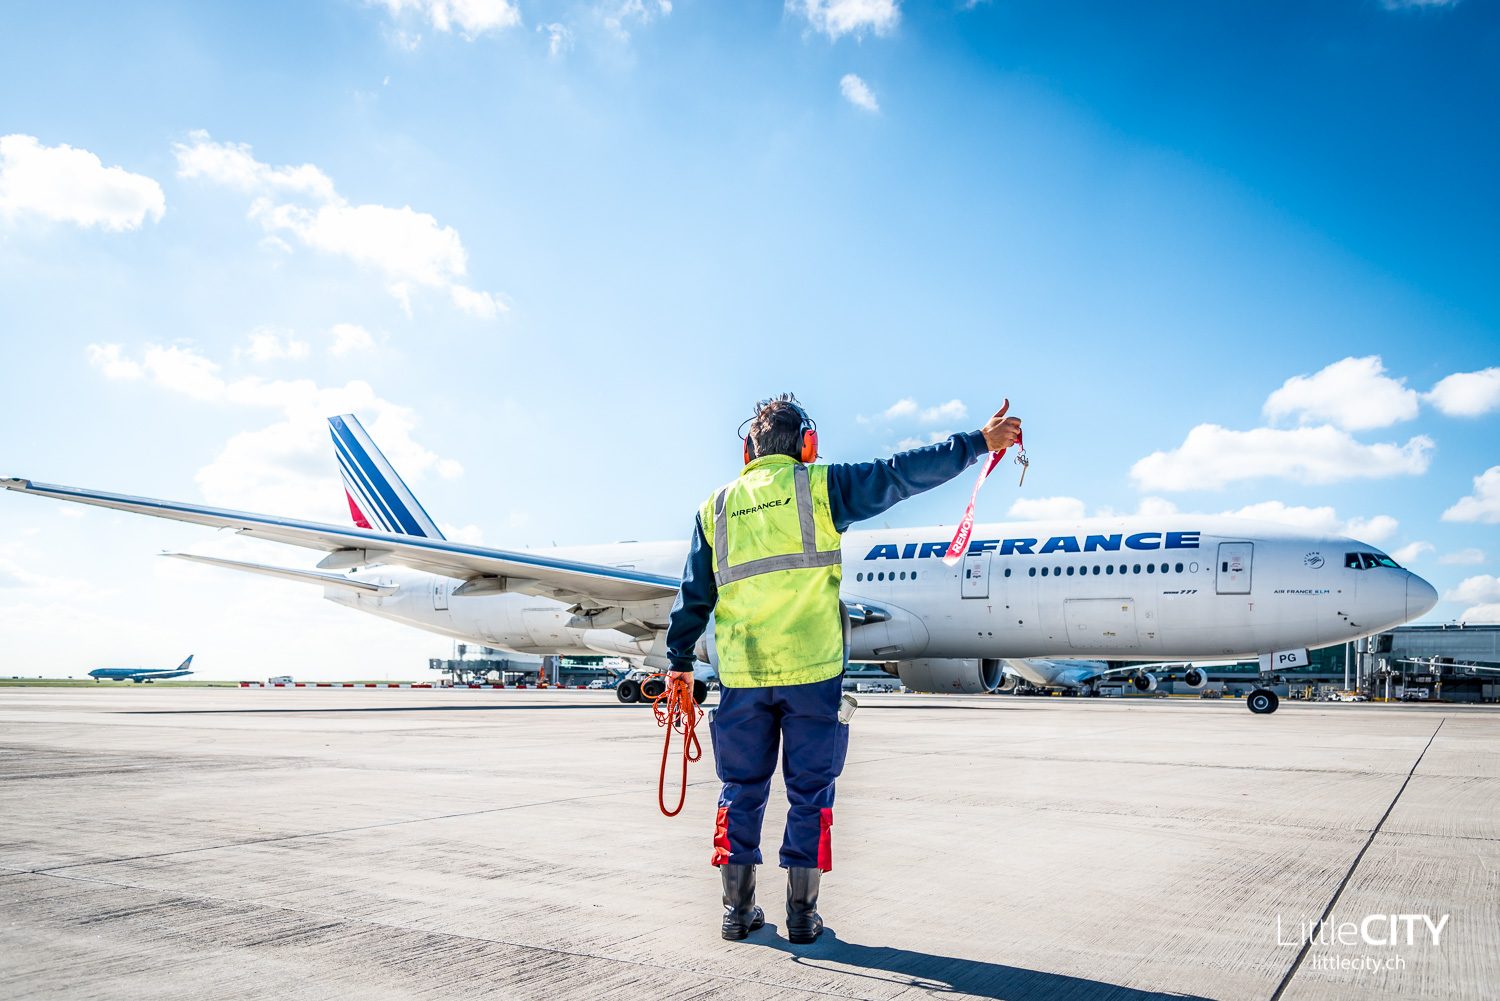 Air France Boeing 777 Pushback - Behind the Scenes at CDG Paris